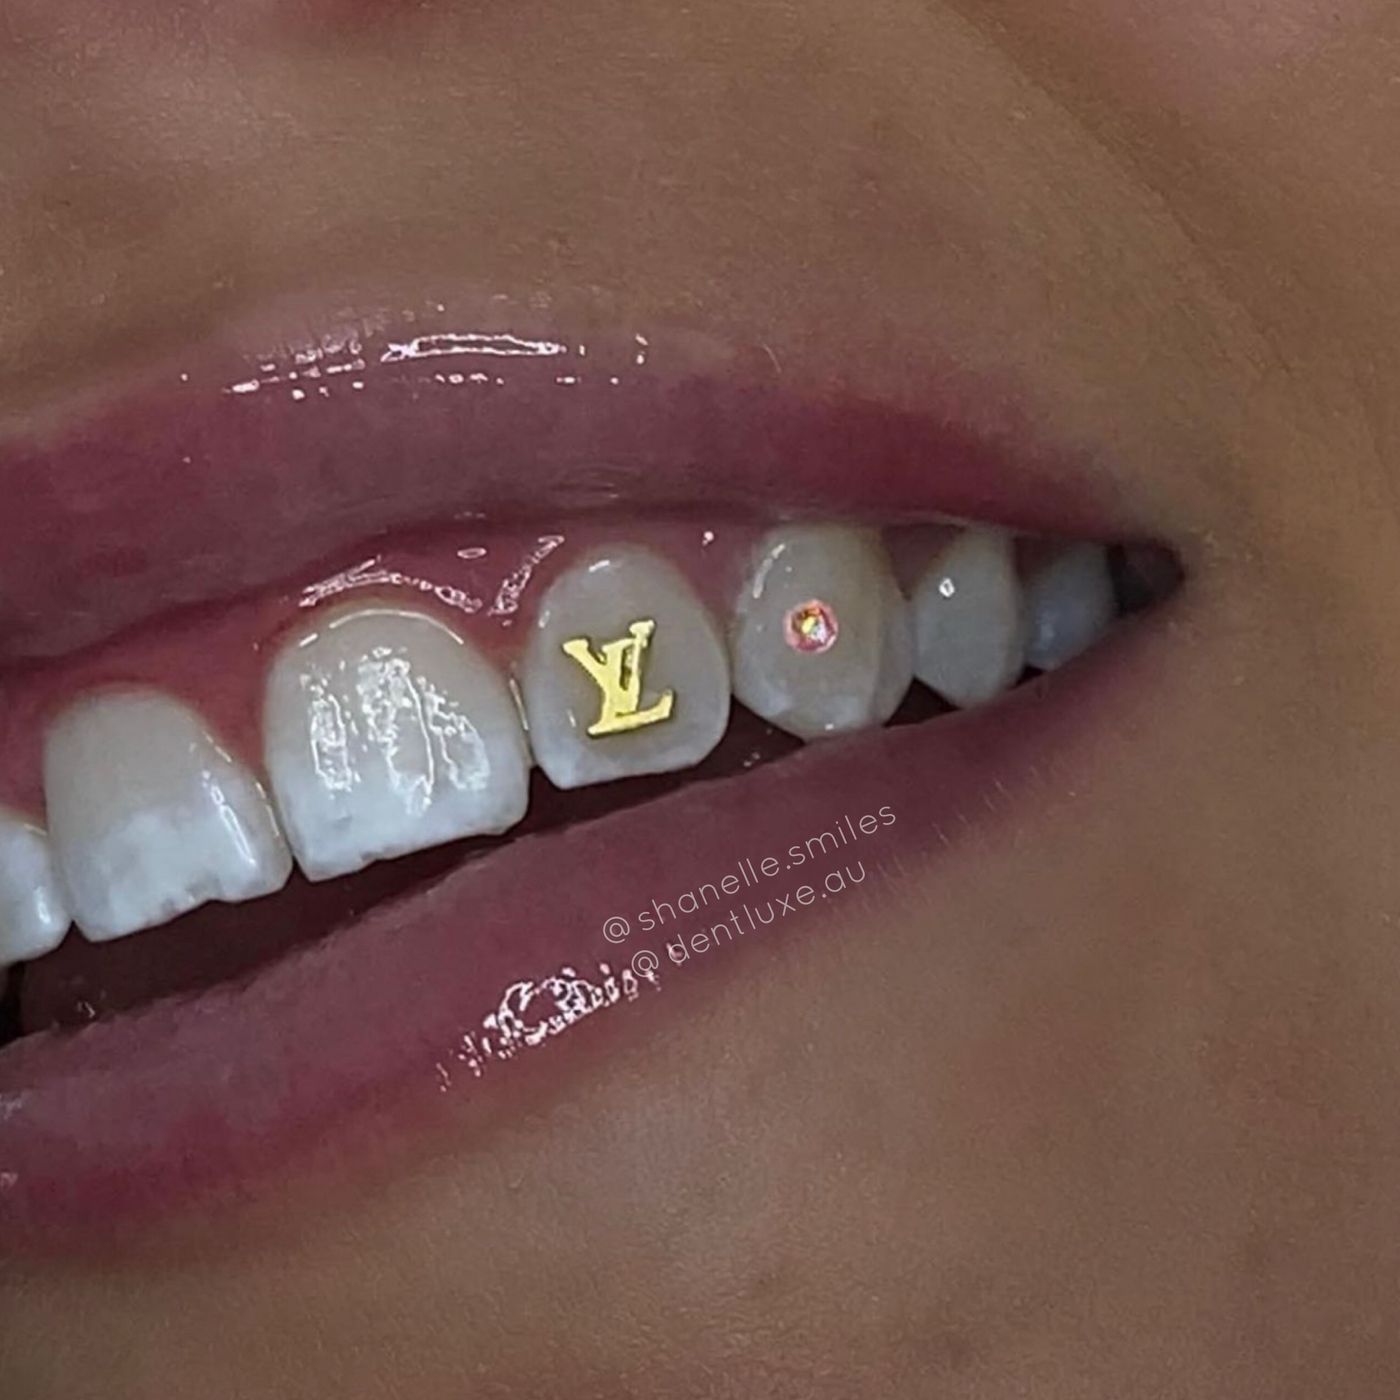 18k Gold Tooth Gems LV - Dentluxe